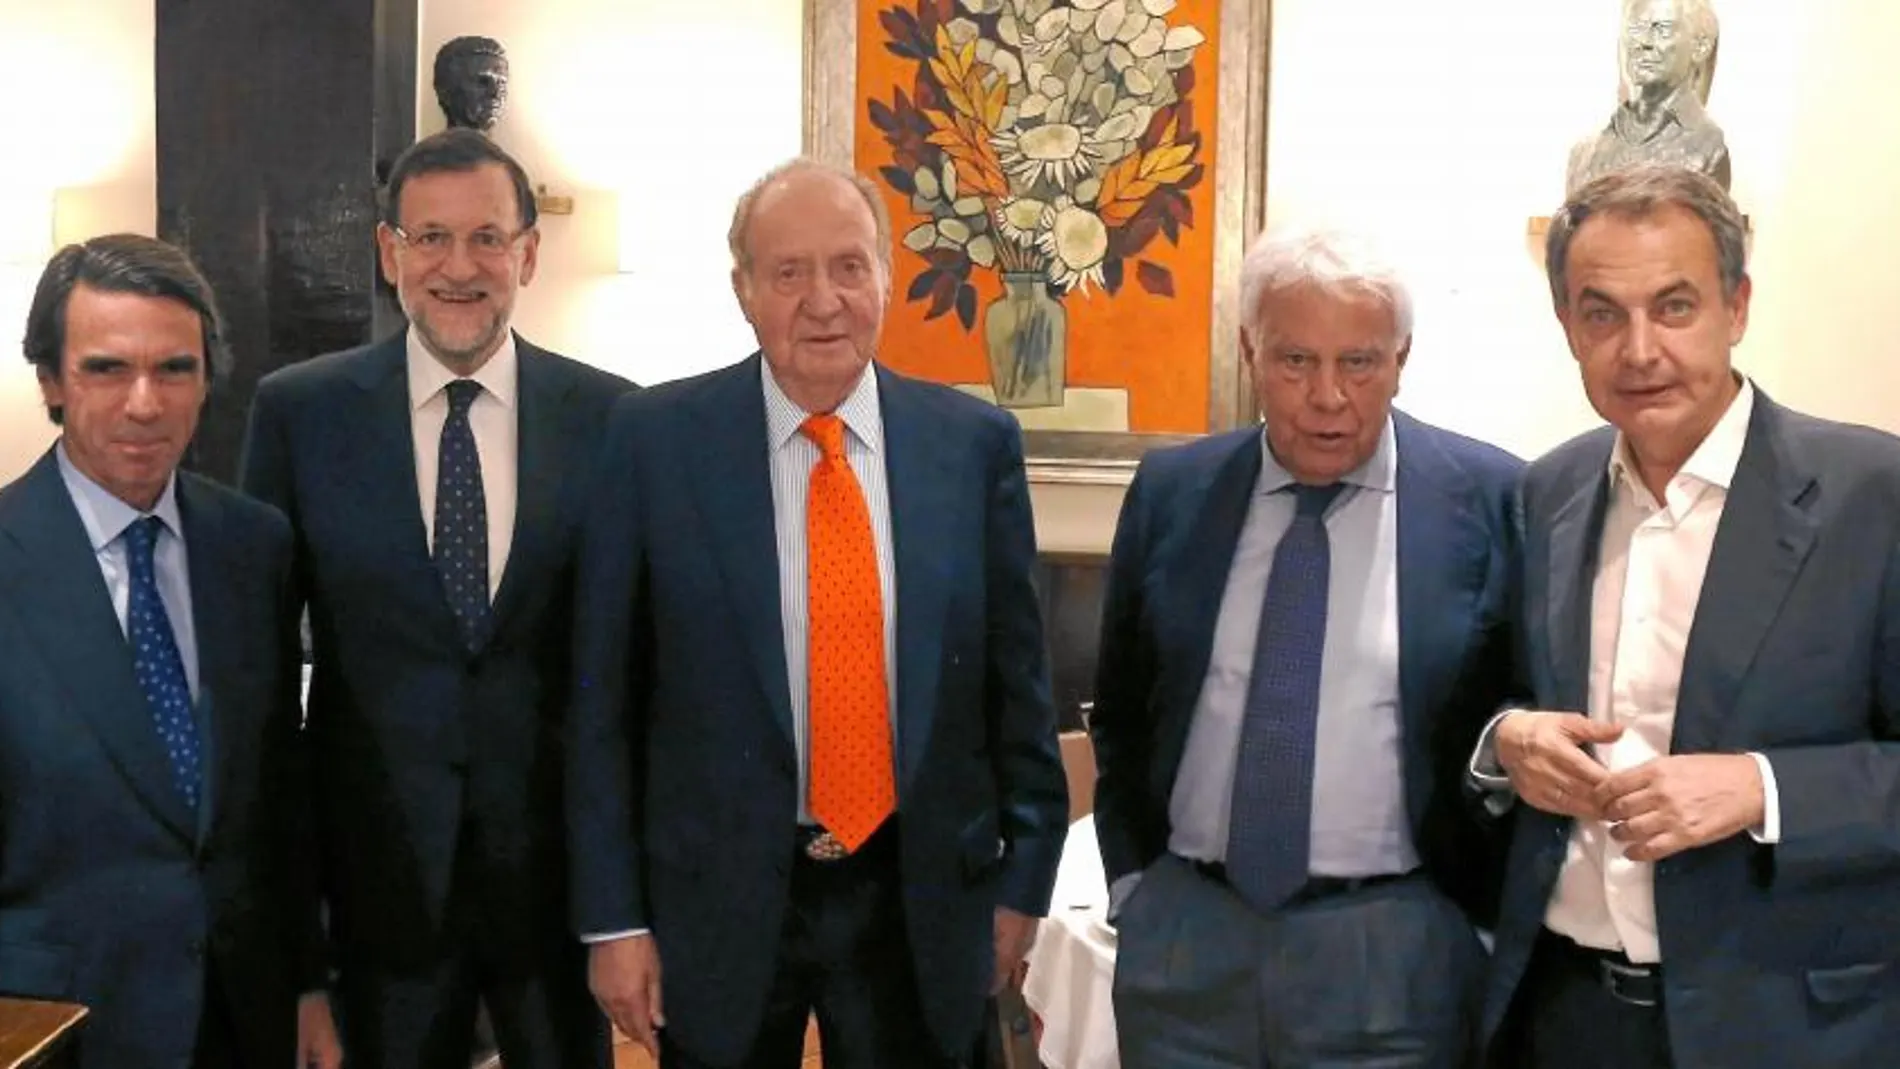 José María Aznar , Mariano Rajoy, Don Juan Carlos, Felipe González, J. L. Rodríguez Aapatero